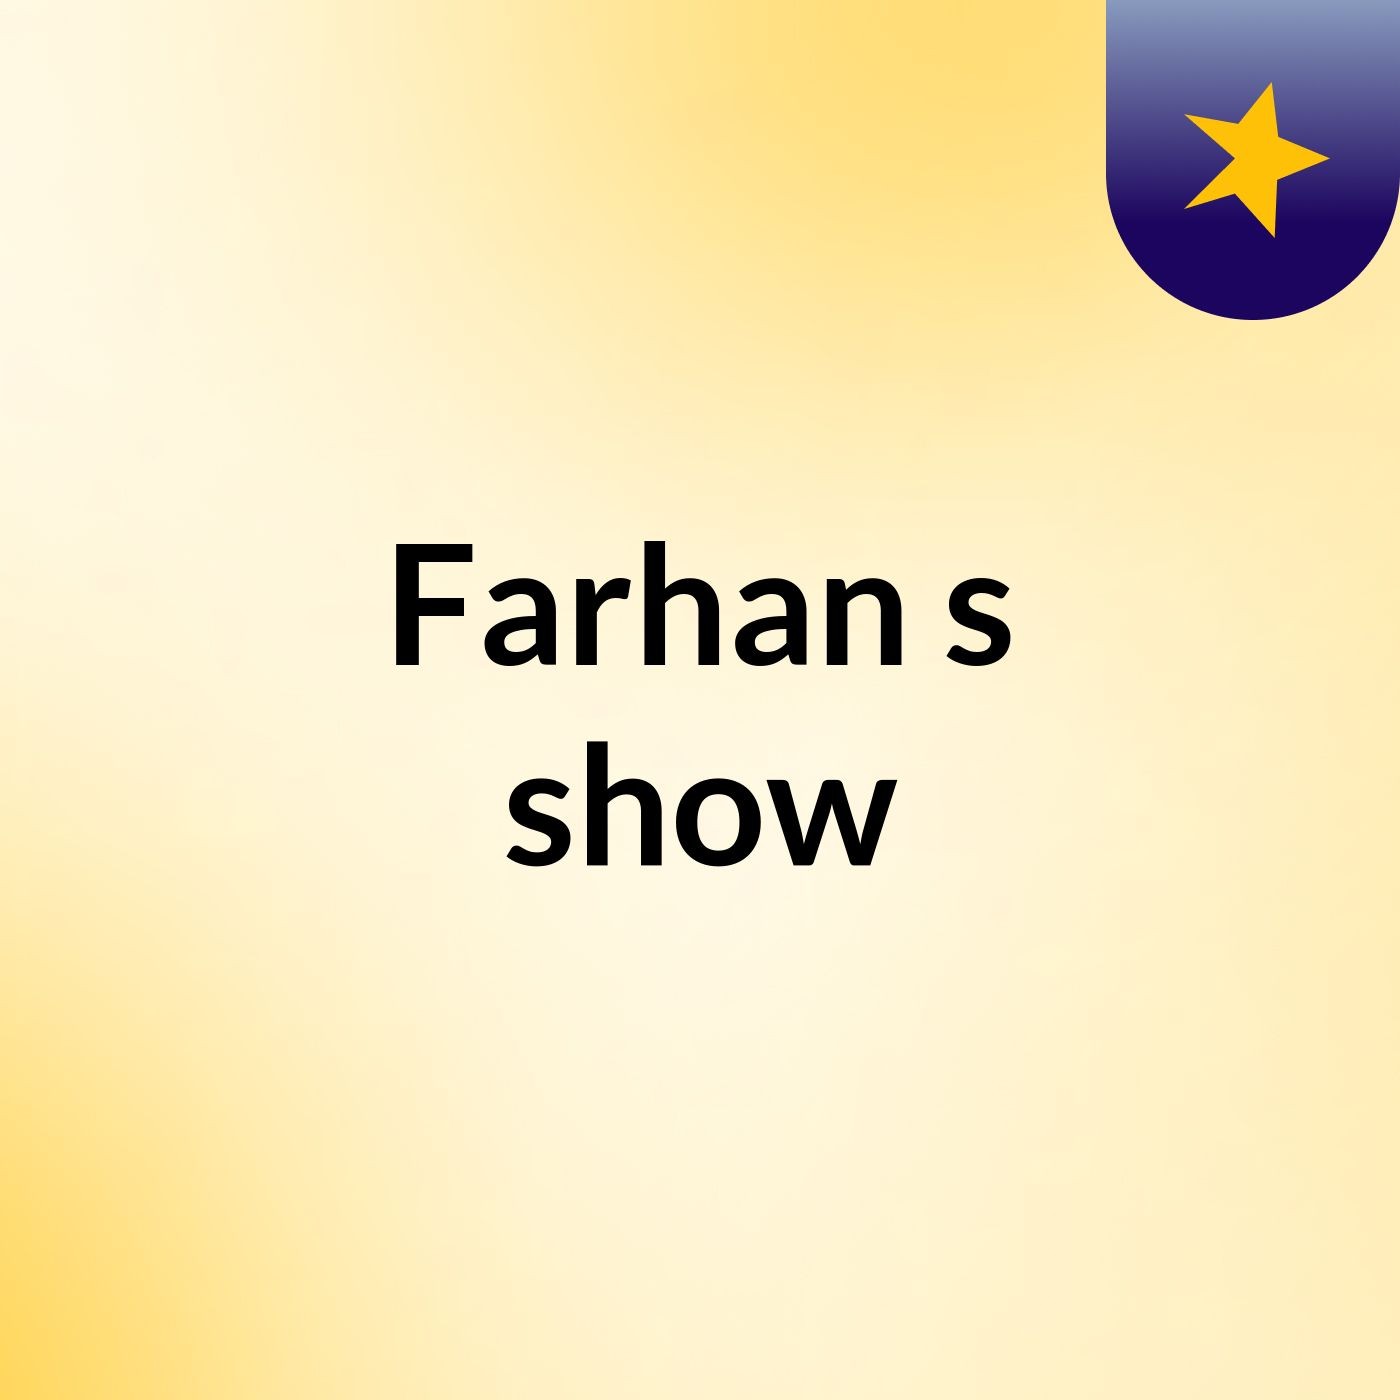 Farhan's show